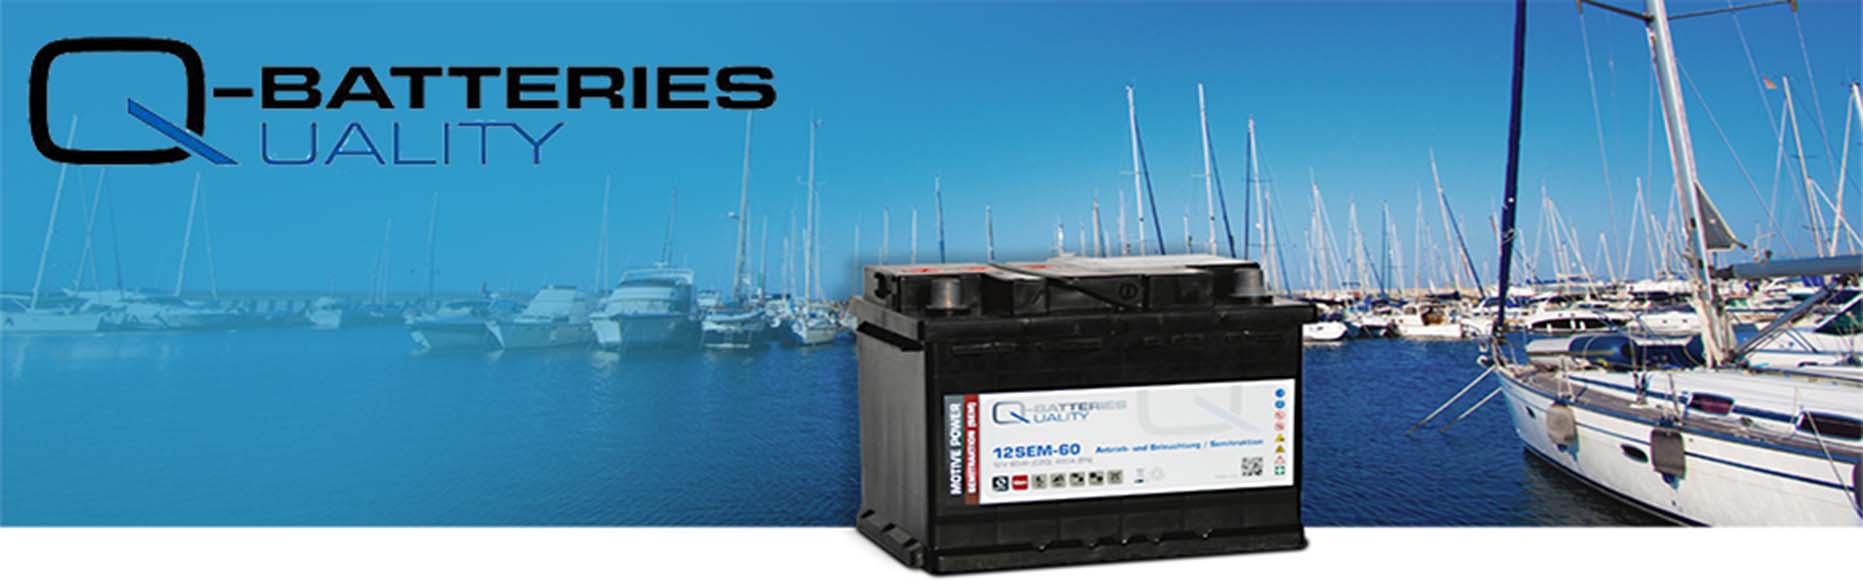 Q-Batterie蓄电池产品中心